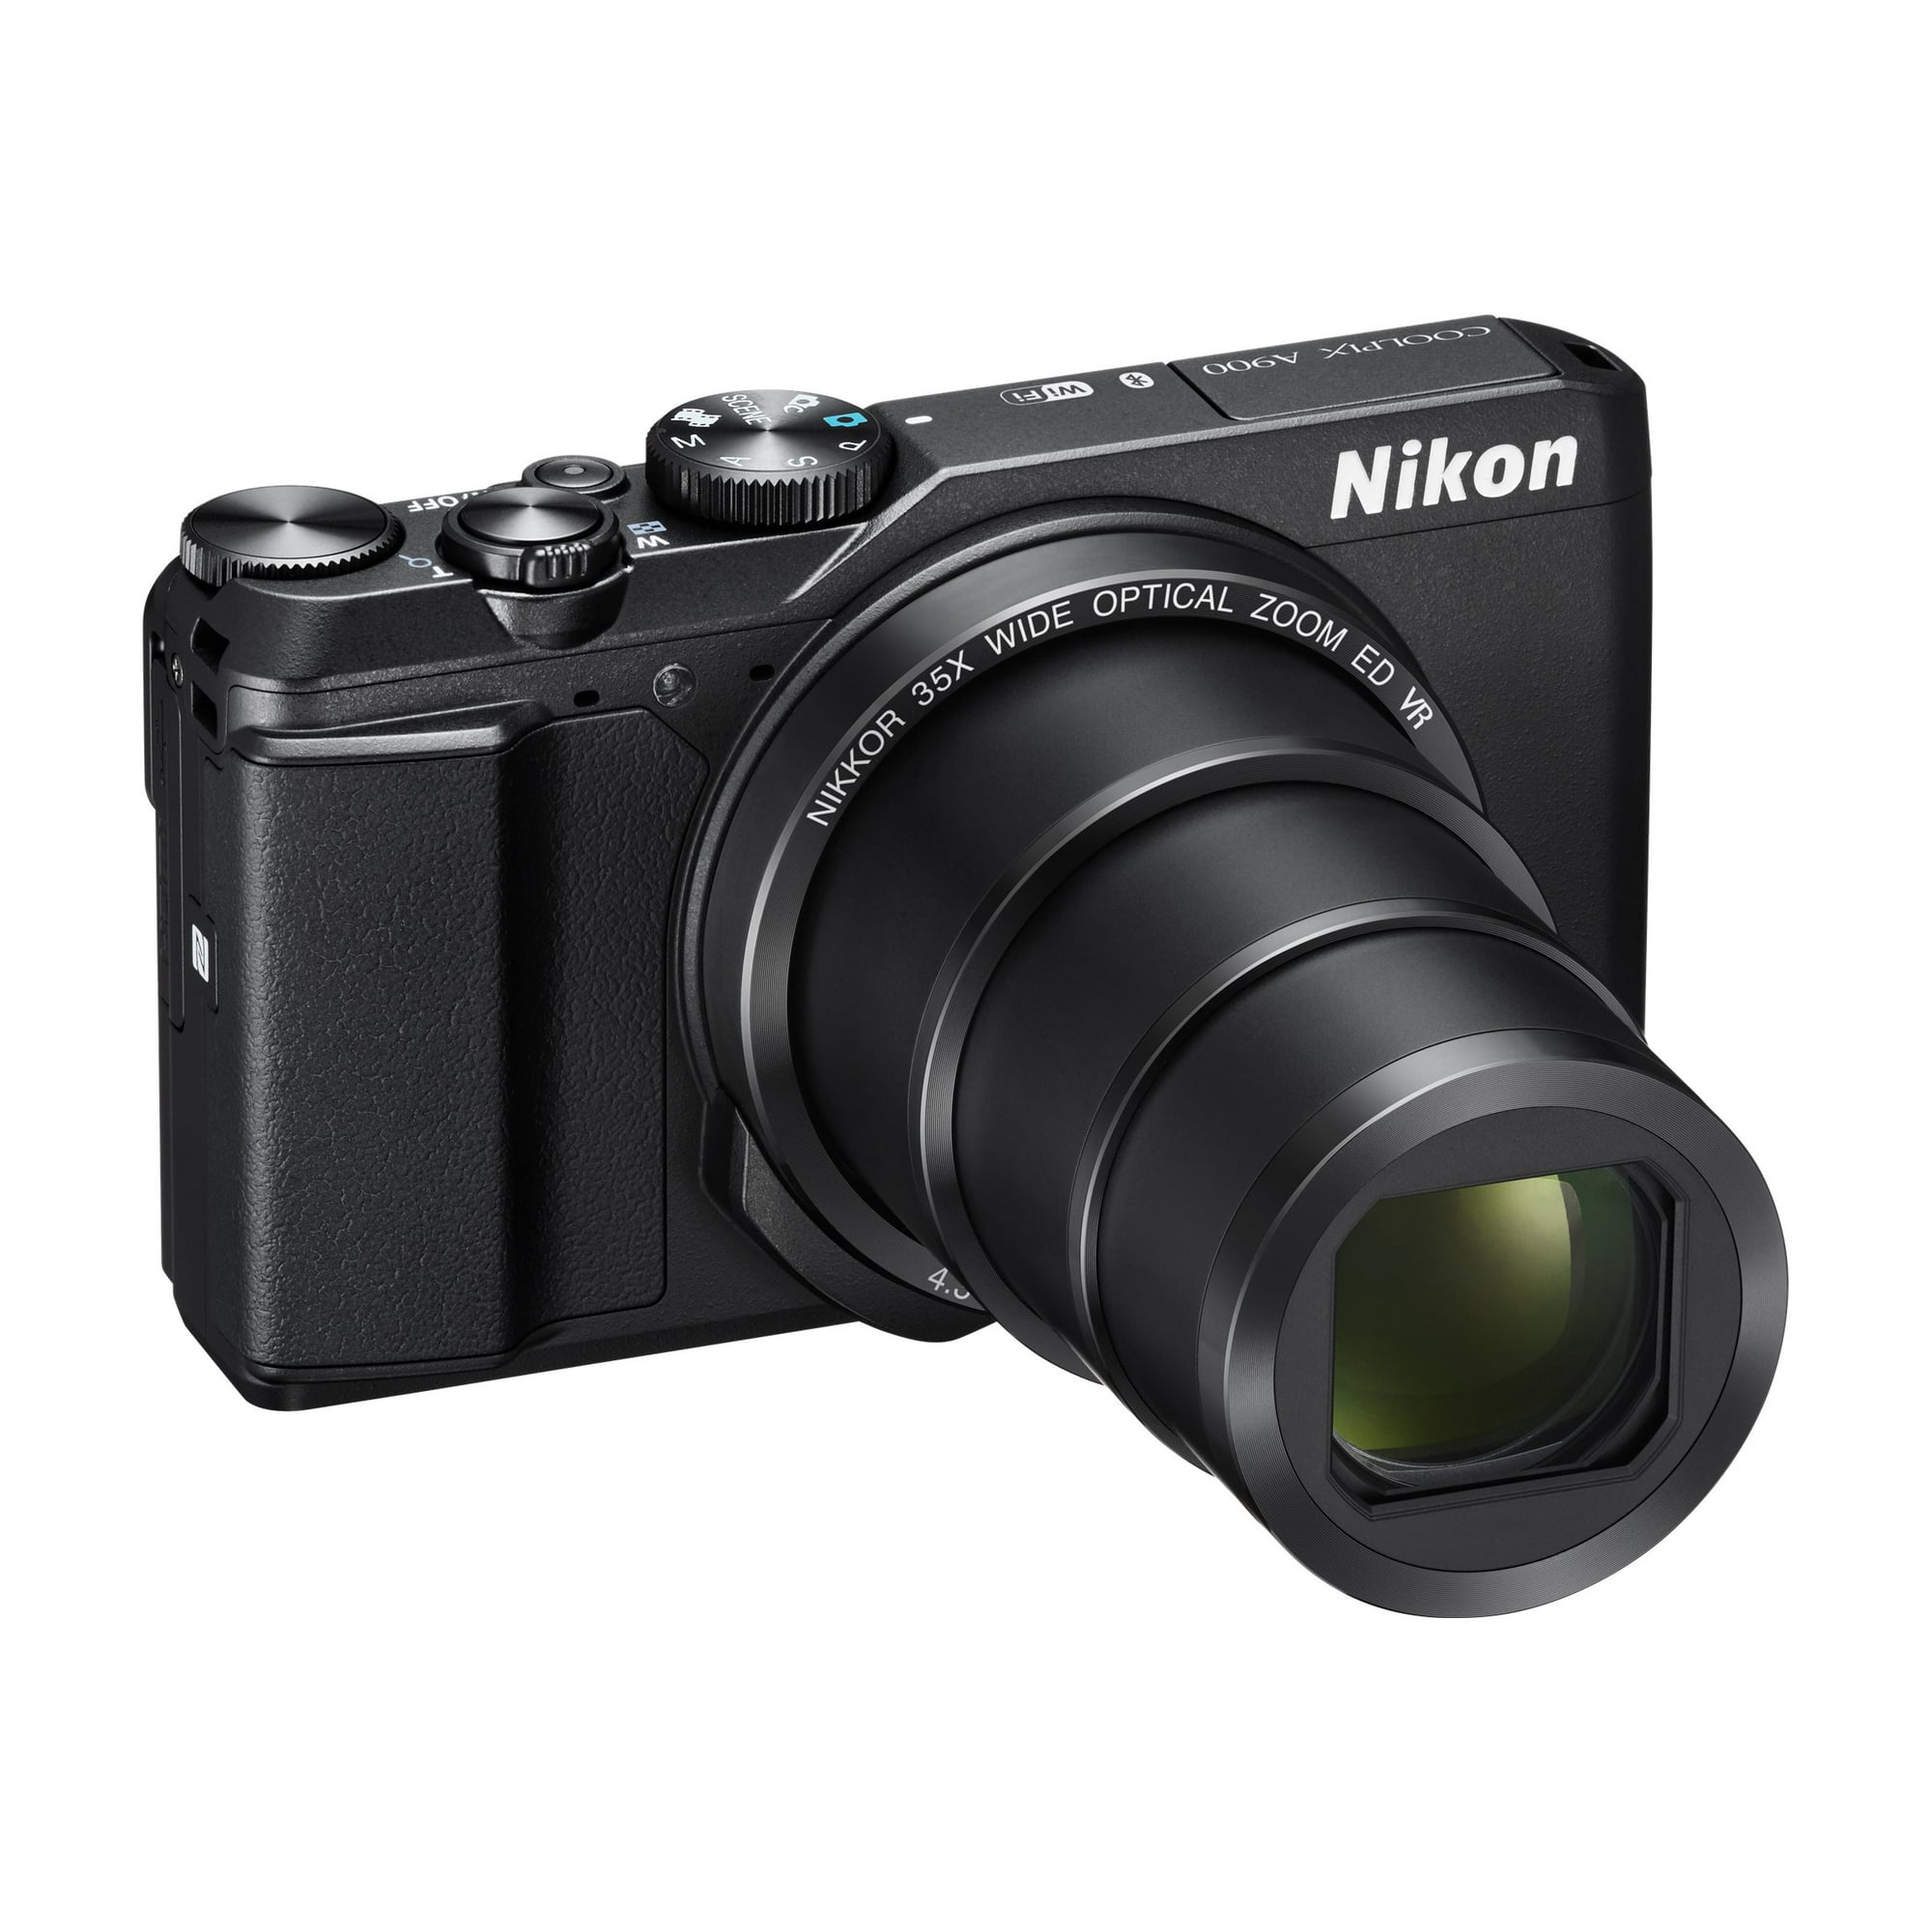 Nikon Coolpix A900 - Digital camera - compact - 20.0 MP - 4K / 30 fps - 35x  optical zoom - Wi-Fi, NFC, Bluetooth - black